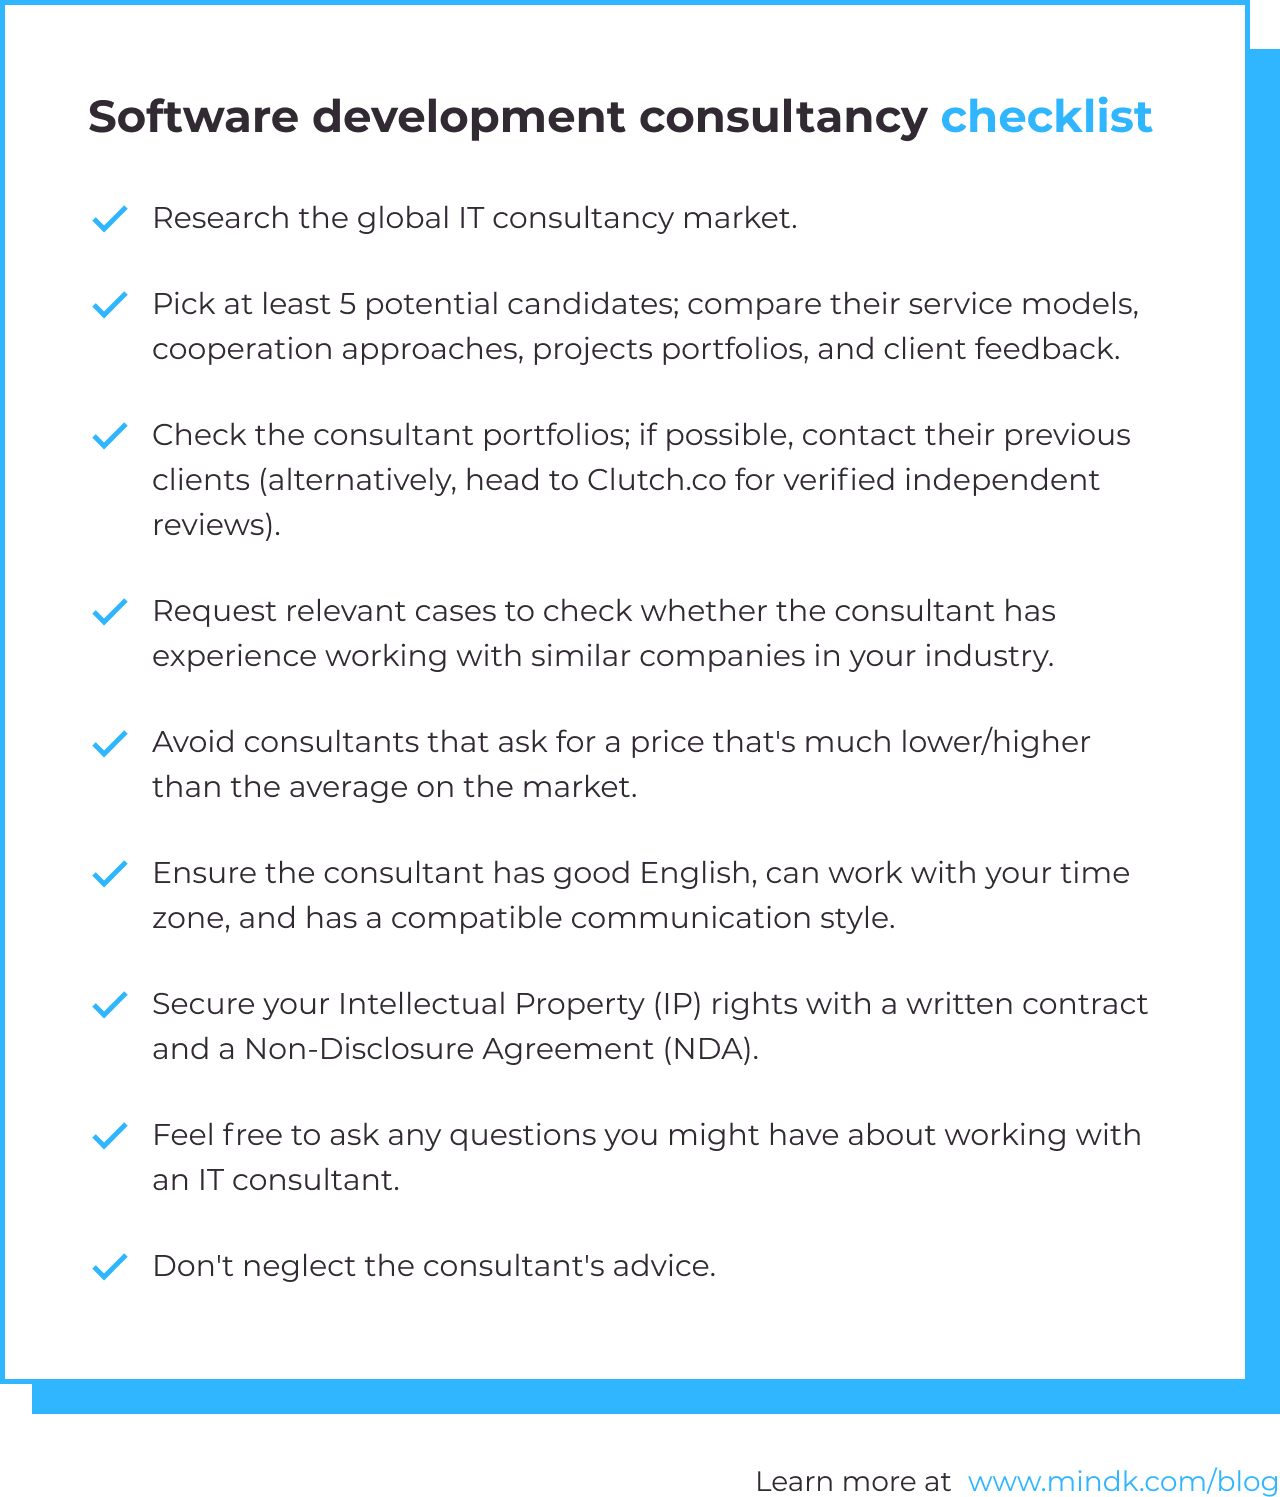 Software development consultant checklist